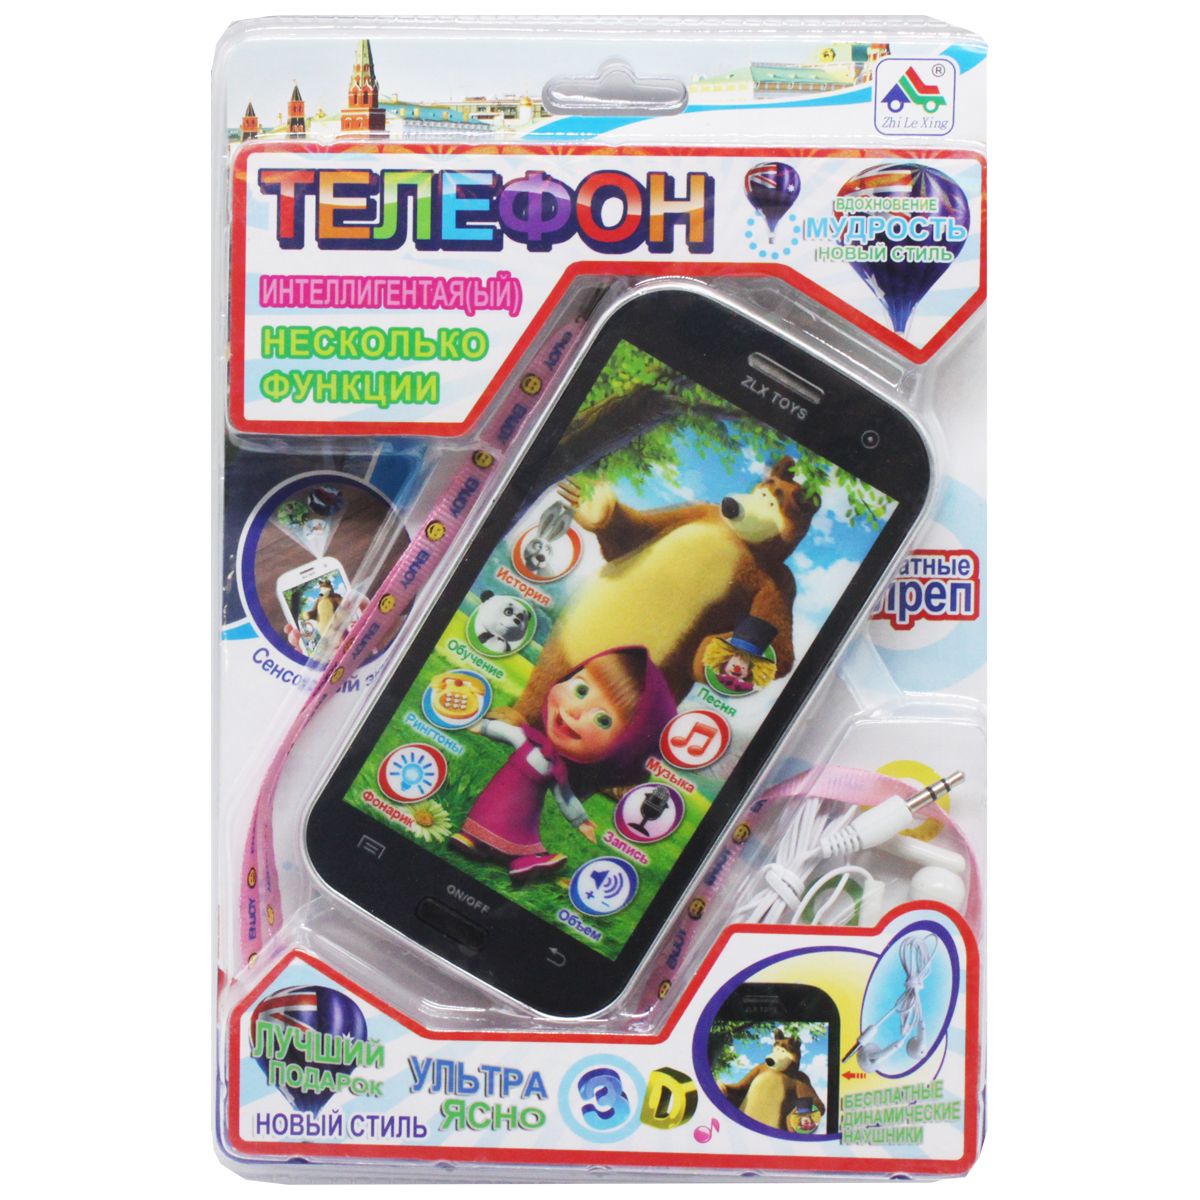 Обучающая игрушка "Телефон"